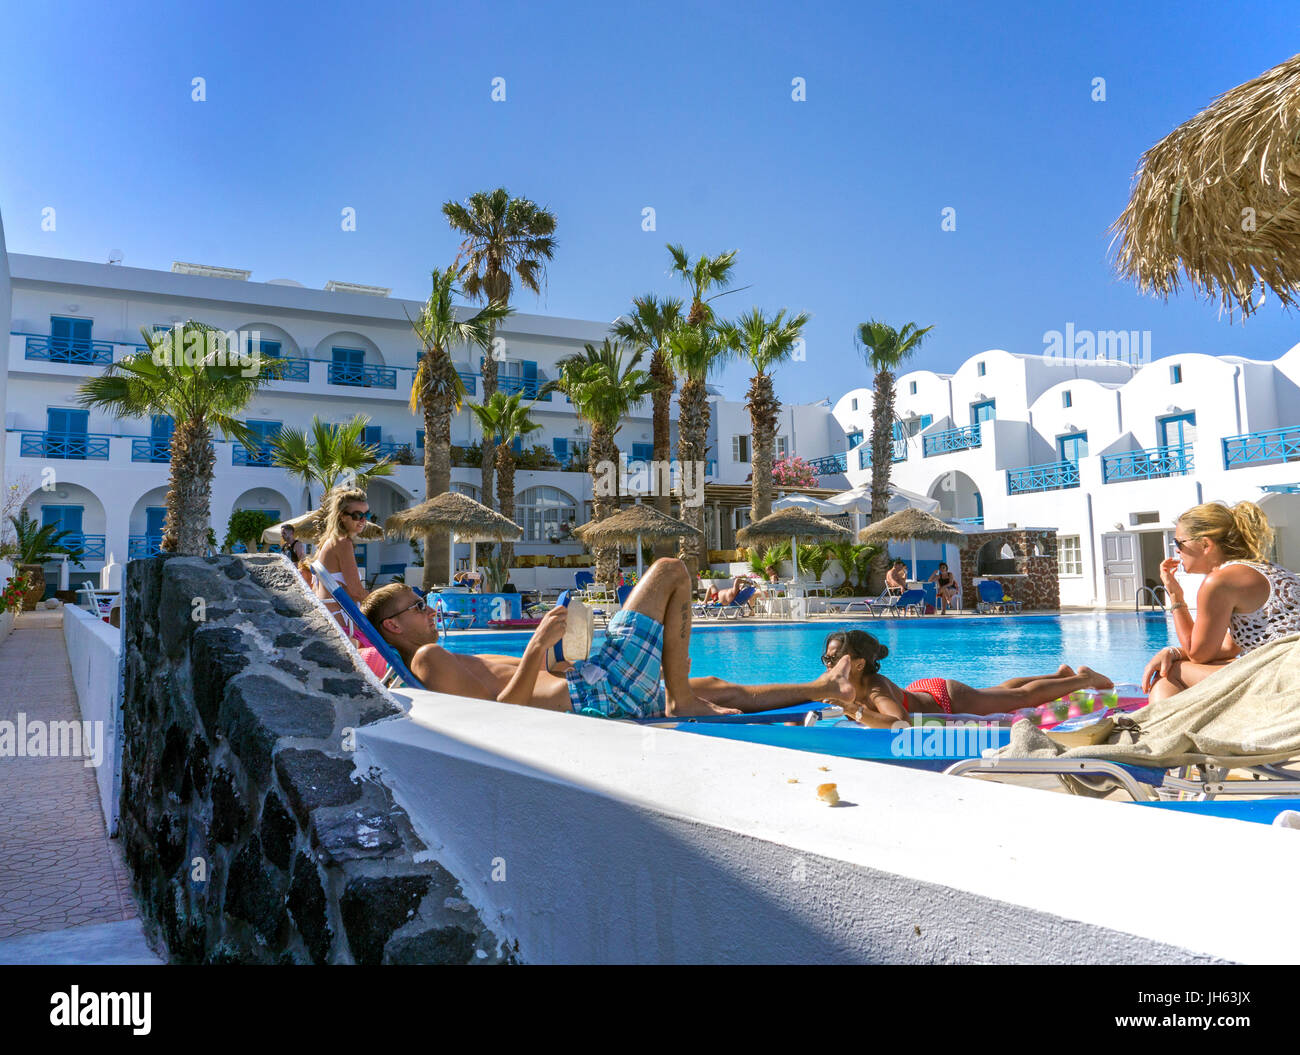 Urlauber relaxn am pool, Hotel am Kamari beach, santorin, kykladen, aegaeis, griechenland, mittelmeer, europa | persone di relax presso la piscina, hotel a Foto Stock